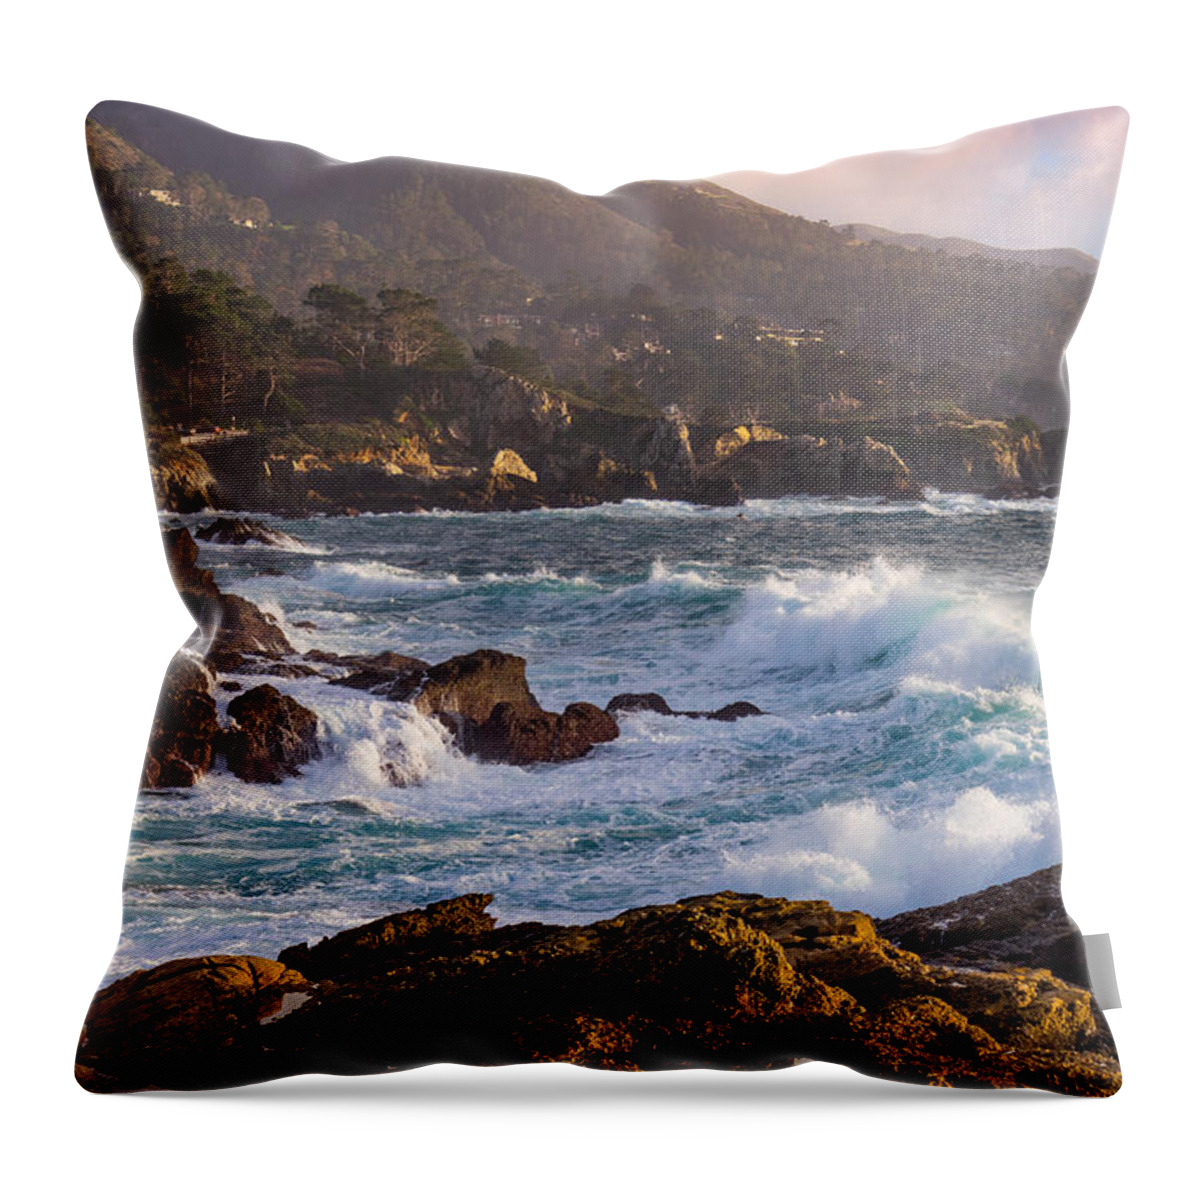 Monterey Throw Pillow featuring the photograph The West Coast by Derek Dean